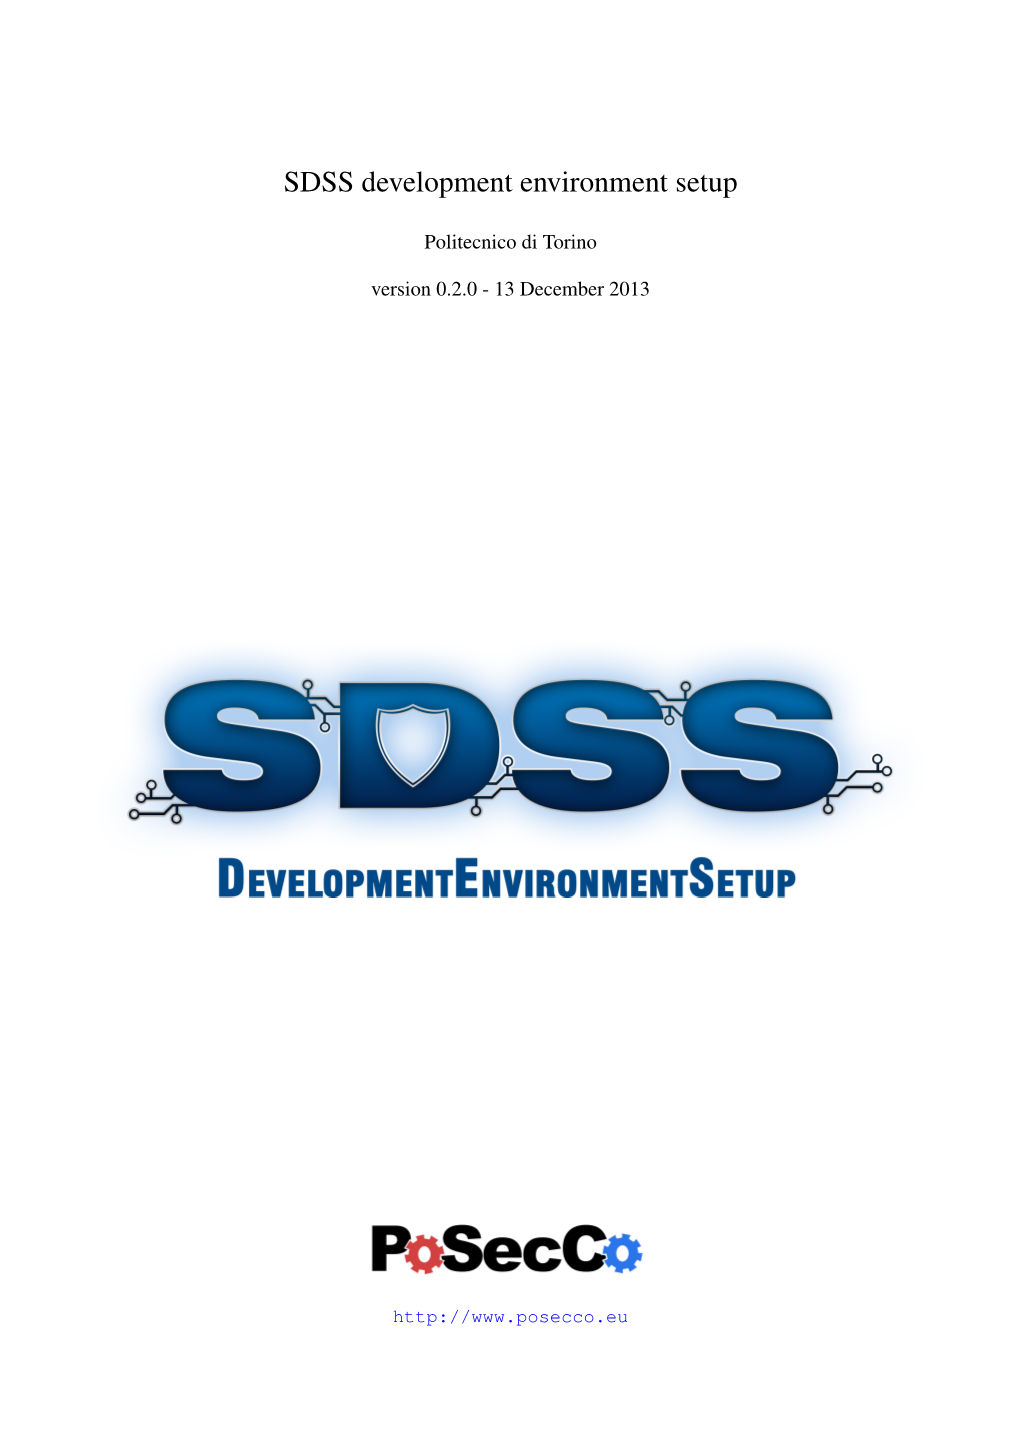 SDSS Development Environment Setup